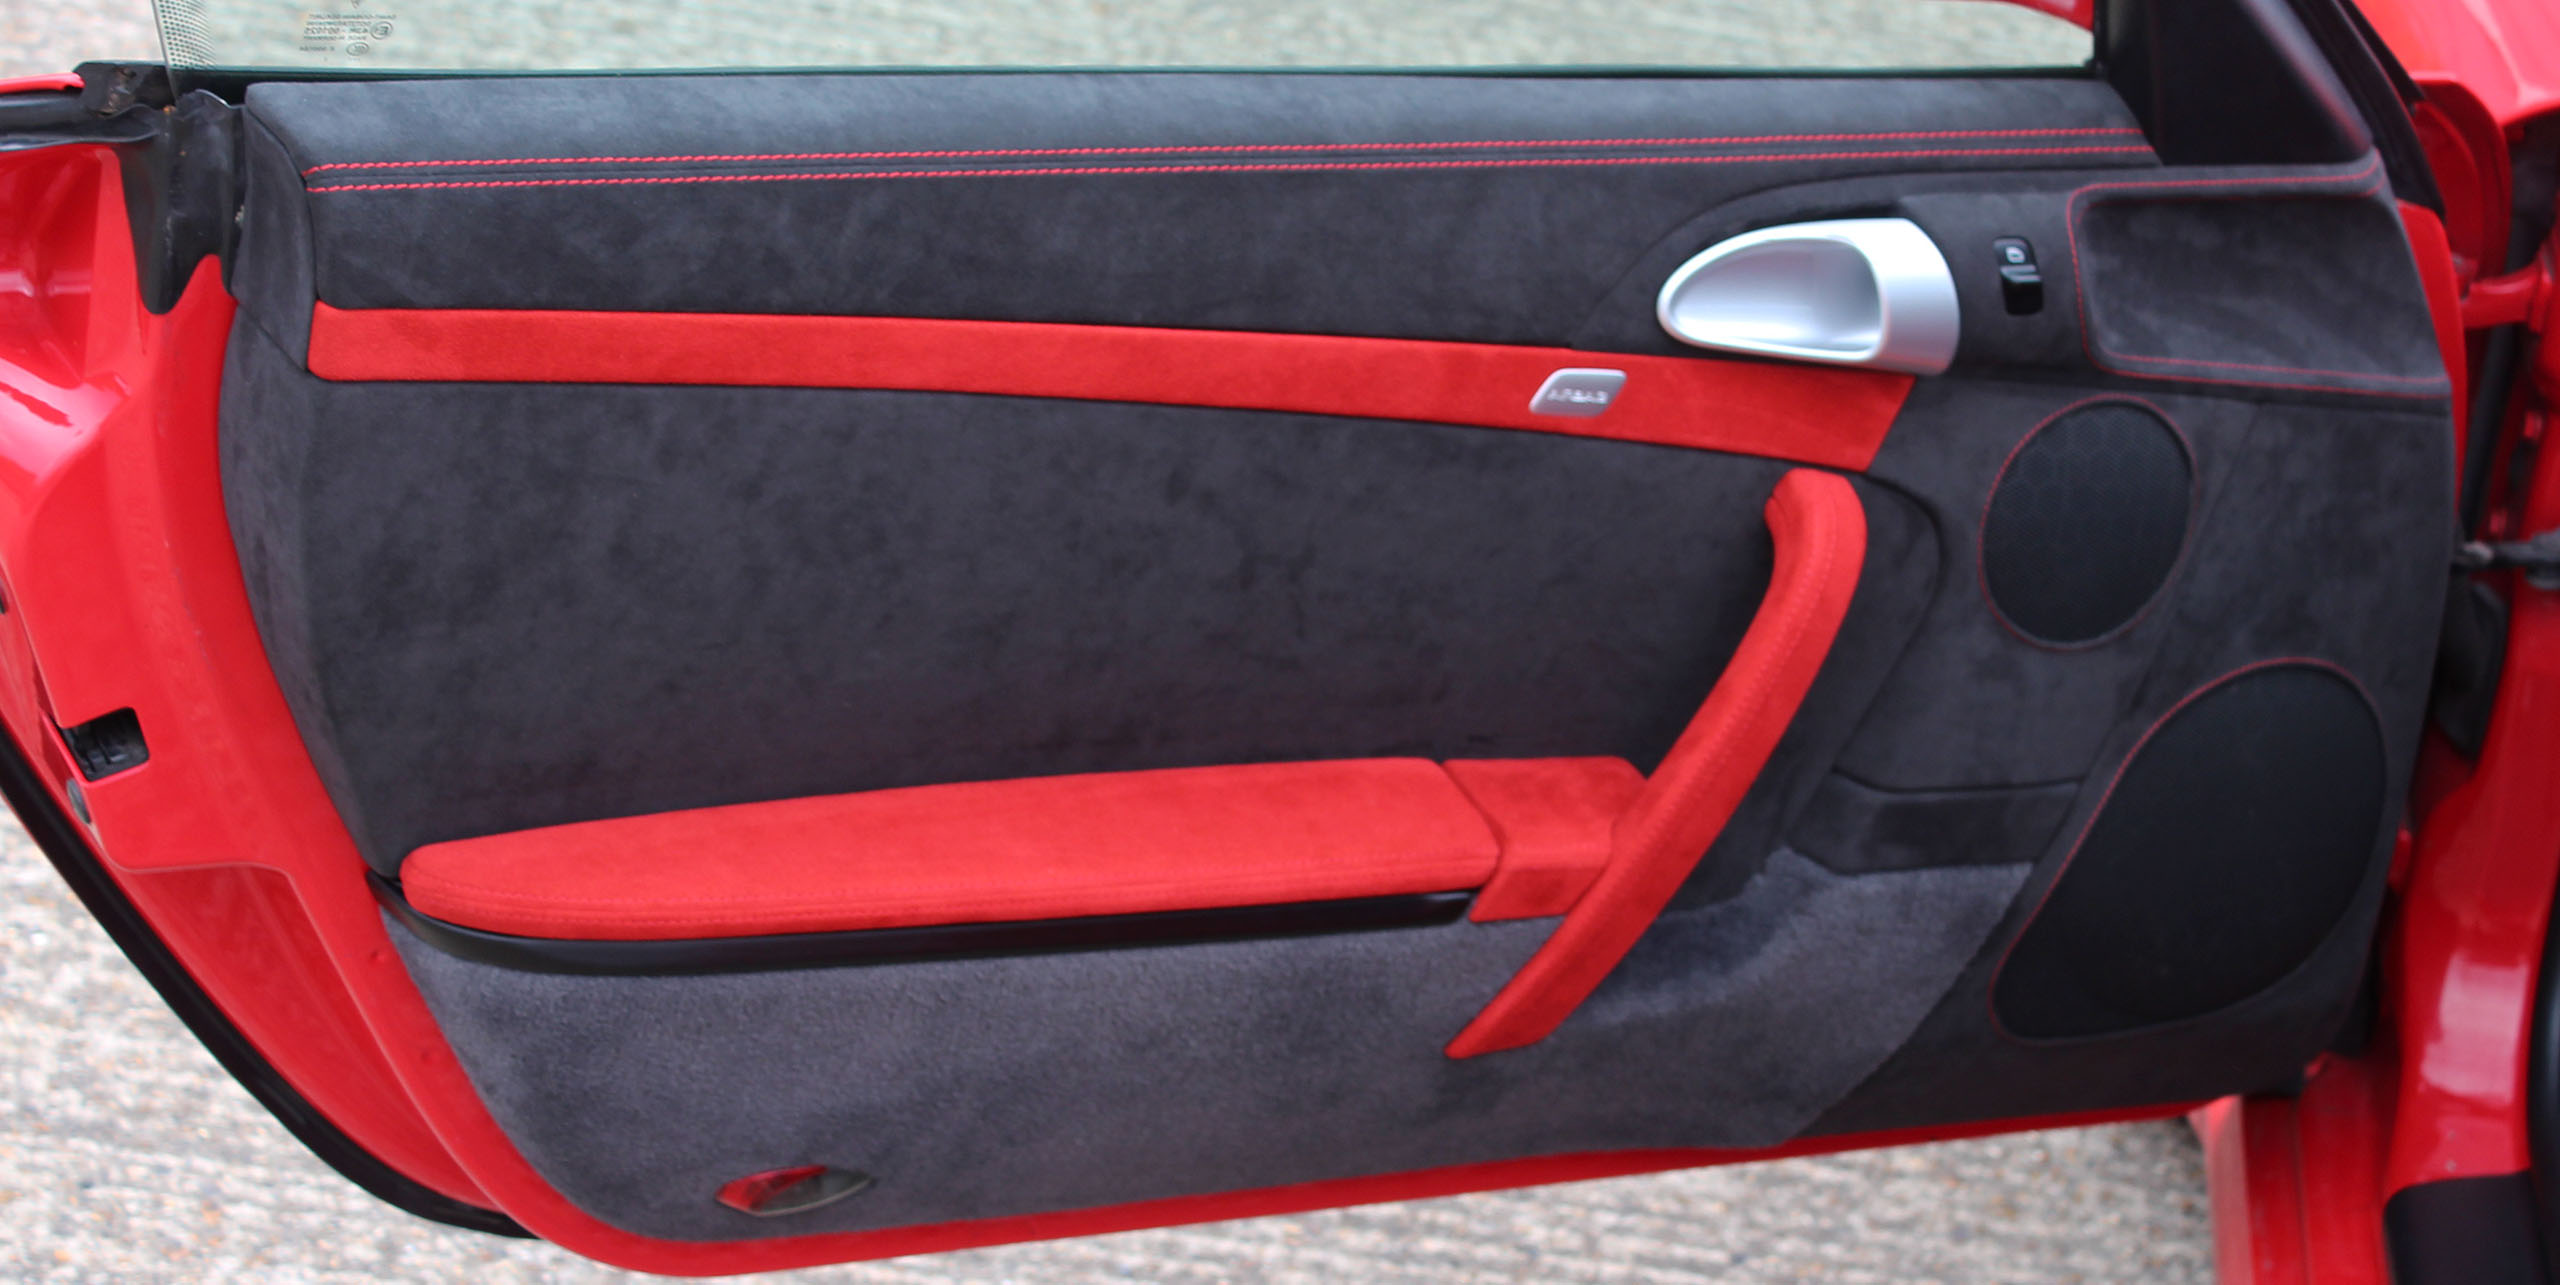 Porsche 911 997 gt3 door card panel re trim Alcantara red armrest grab handle by Designls